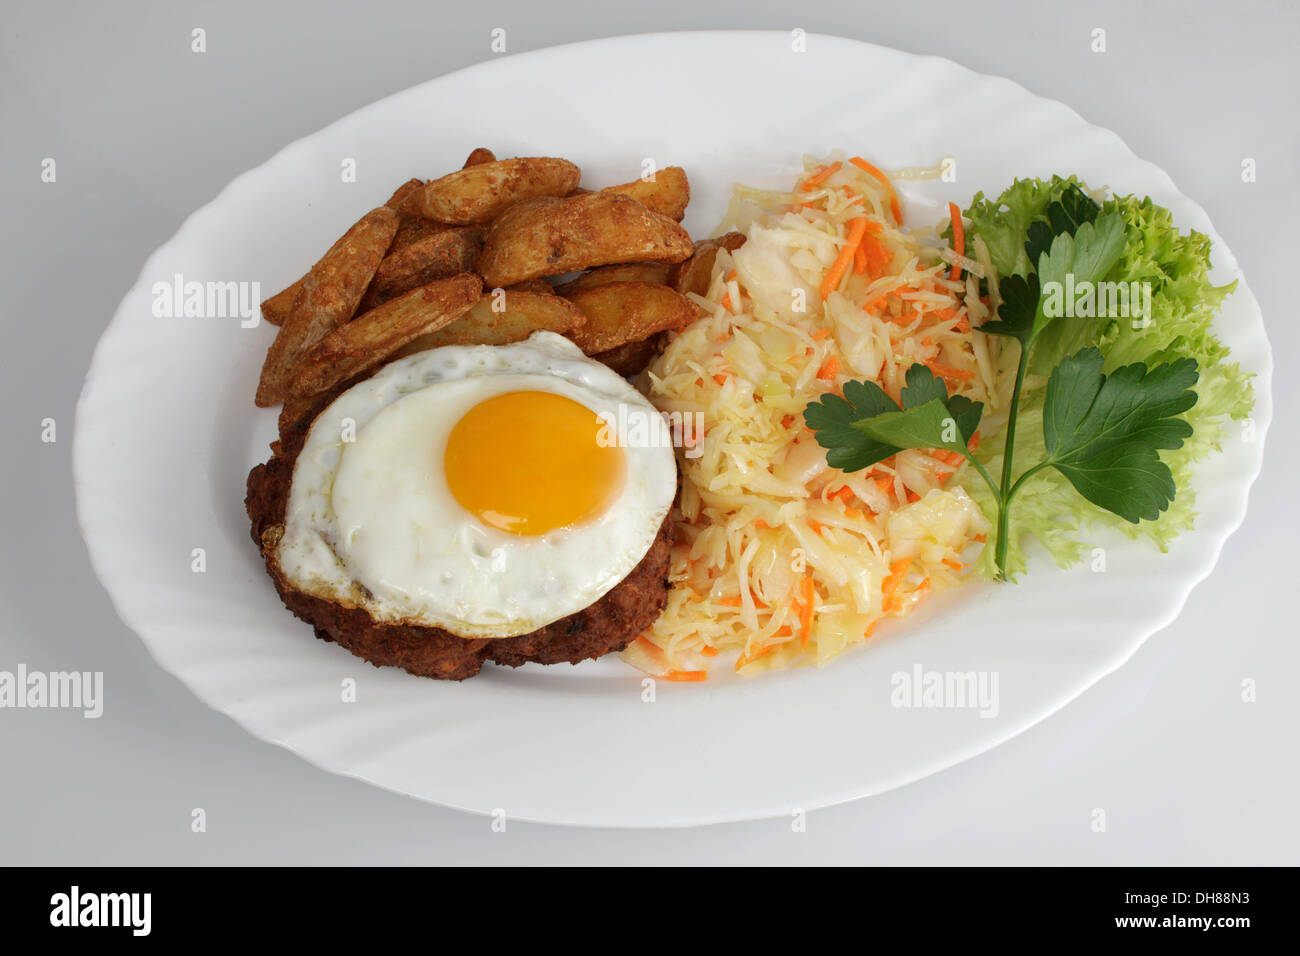 Farmers meat ball, hamburger steak, fried egg, baked potatoe wedges, coleslaw Stock Photo